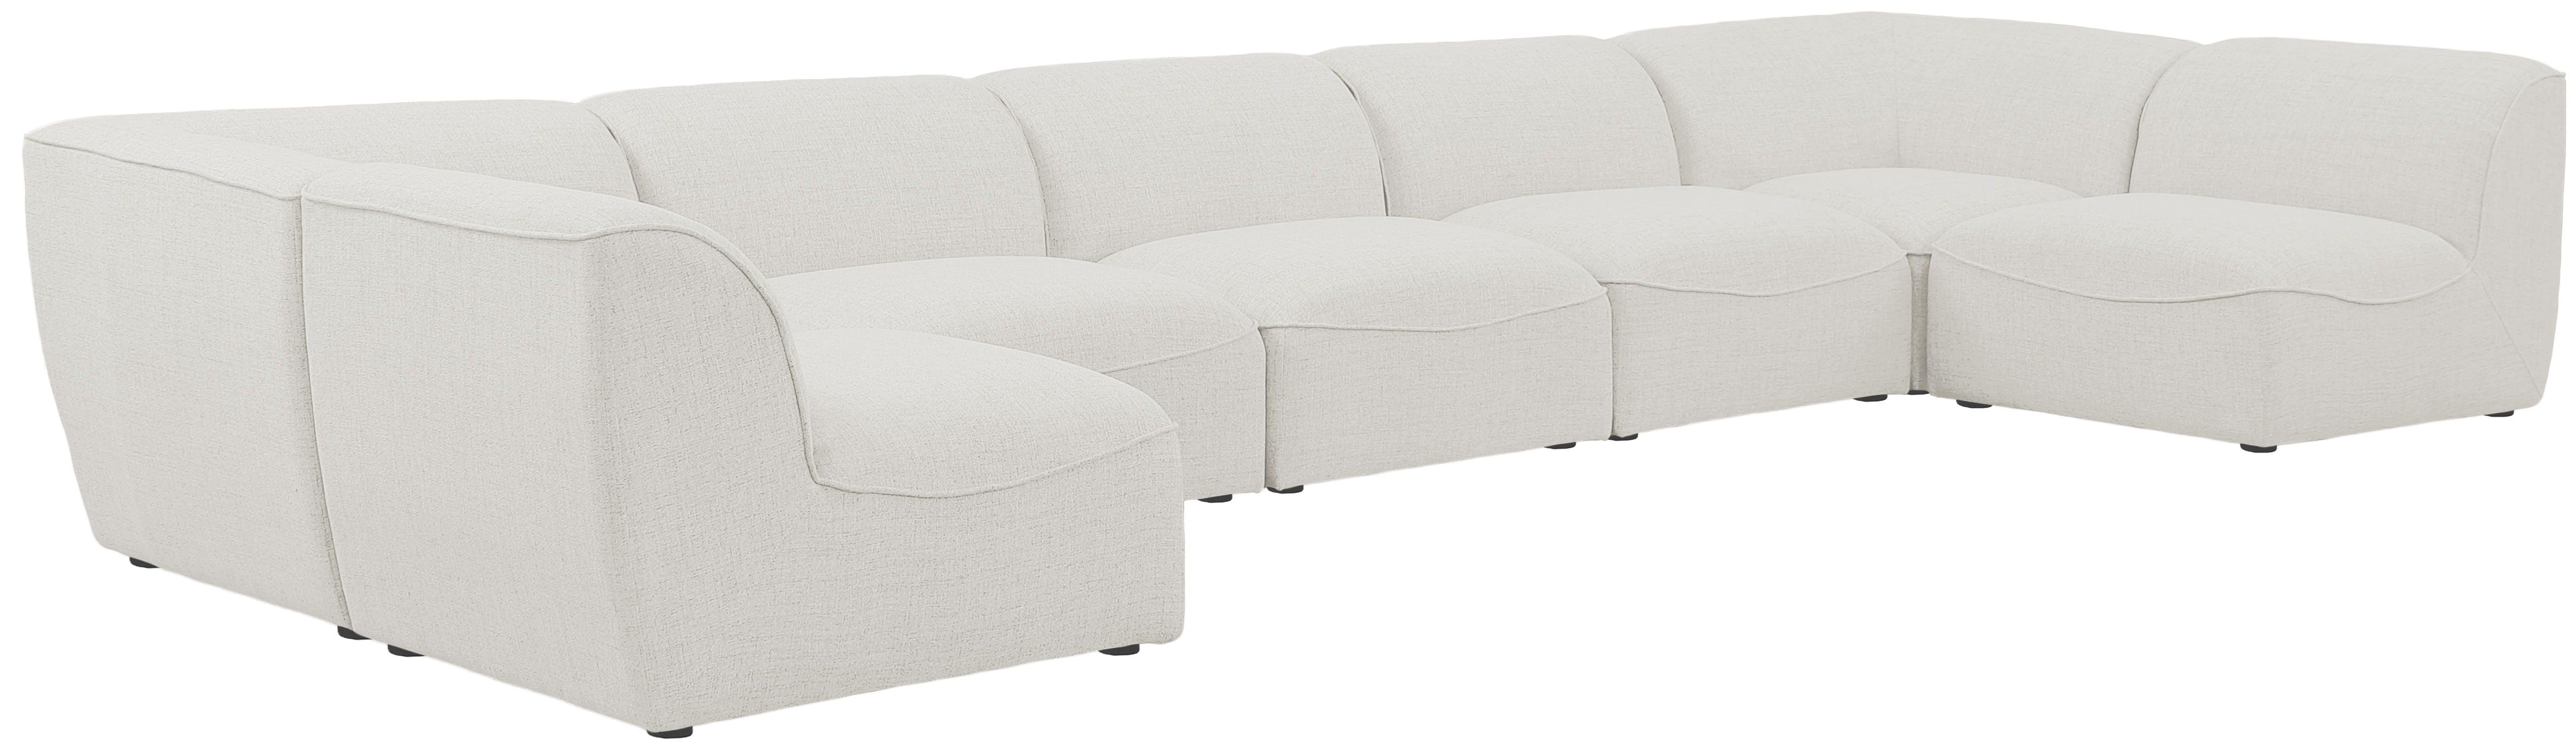 Meridian Furniture - Miramar - Modular Sectional 7 Piece - Cream - 5th Avenue Furniture